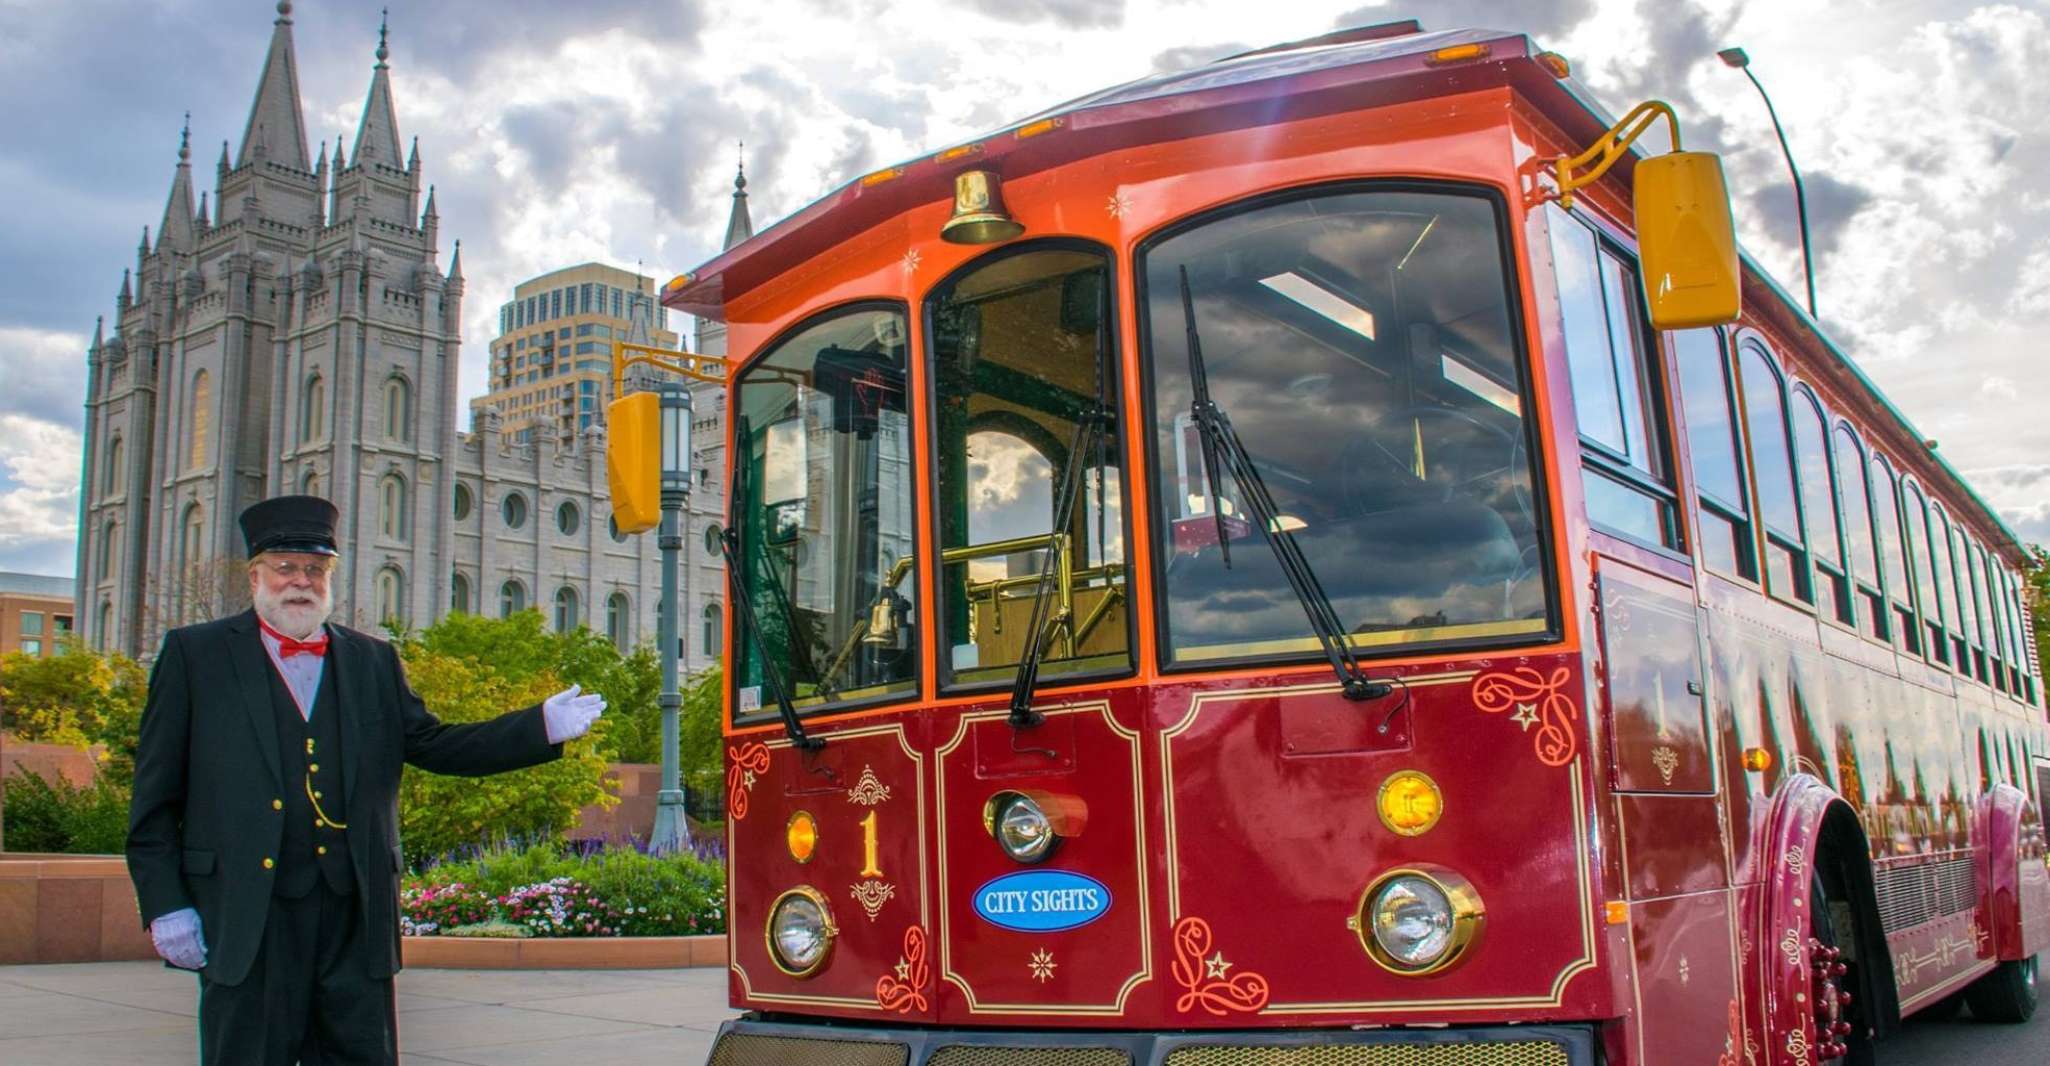 Salt Lake City, Trolley Show-Tour - Housity